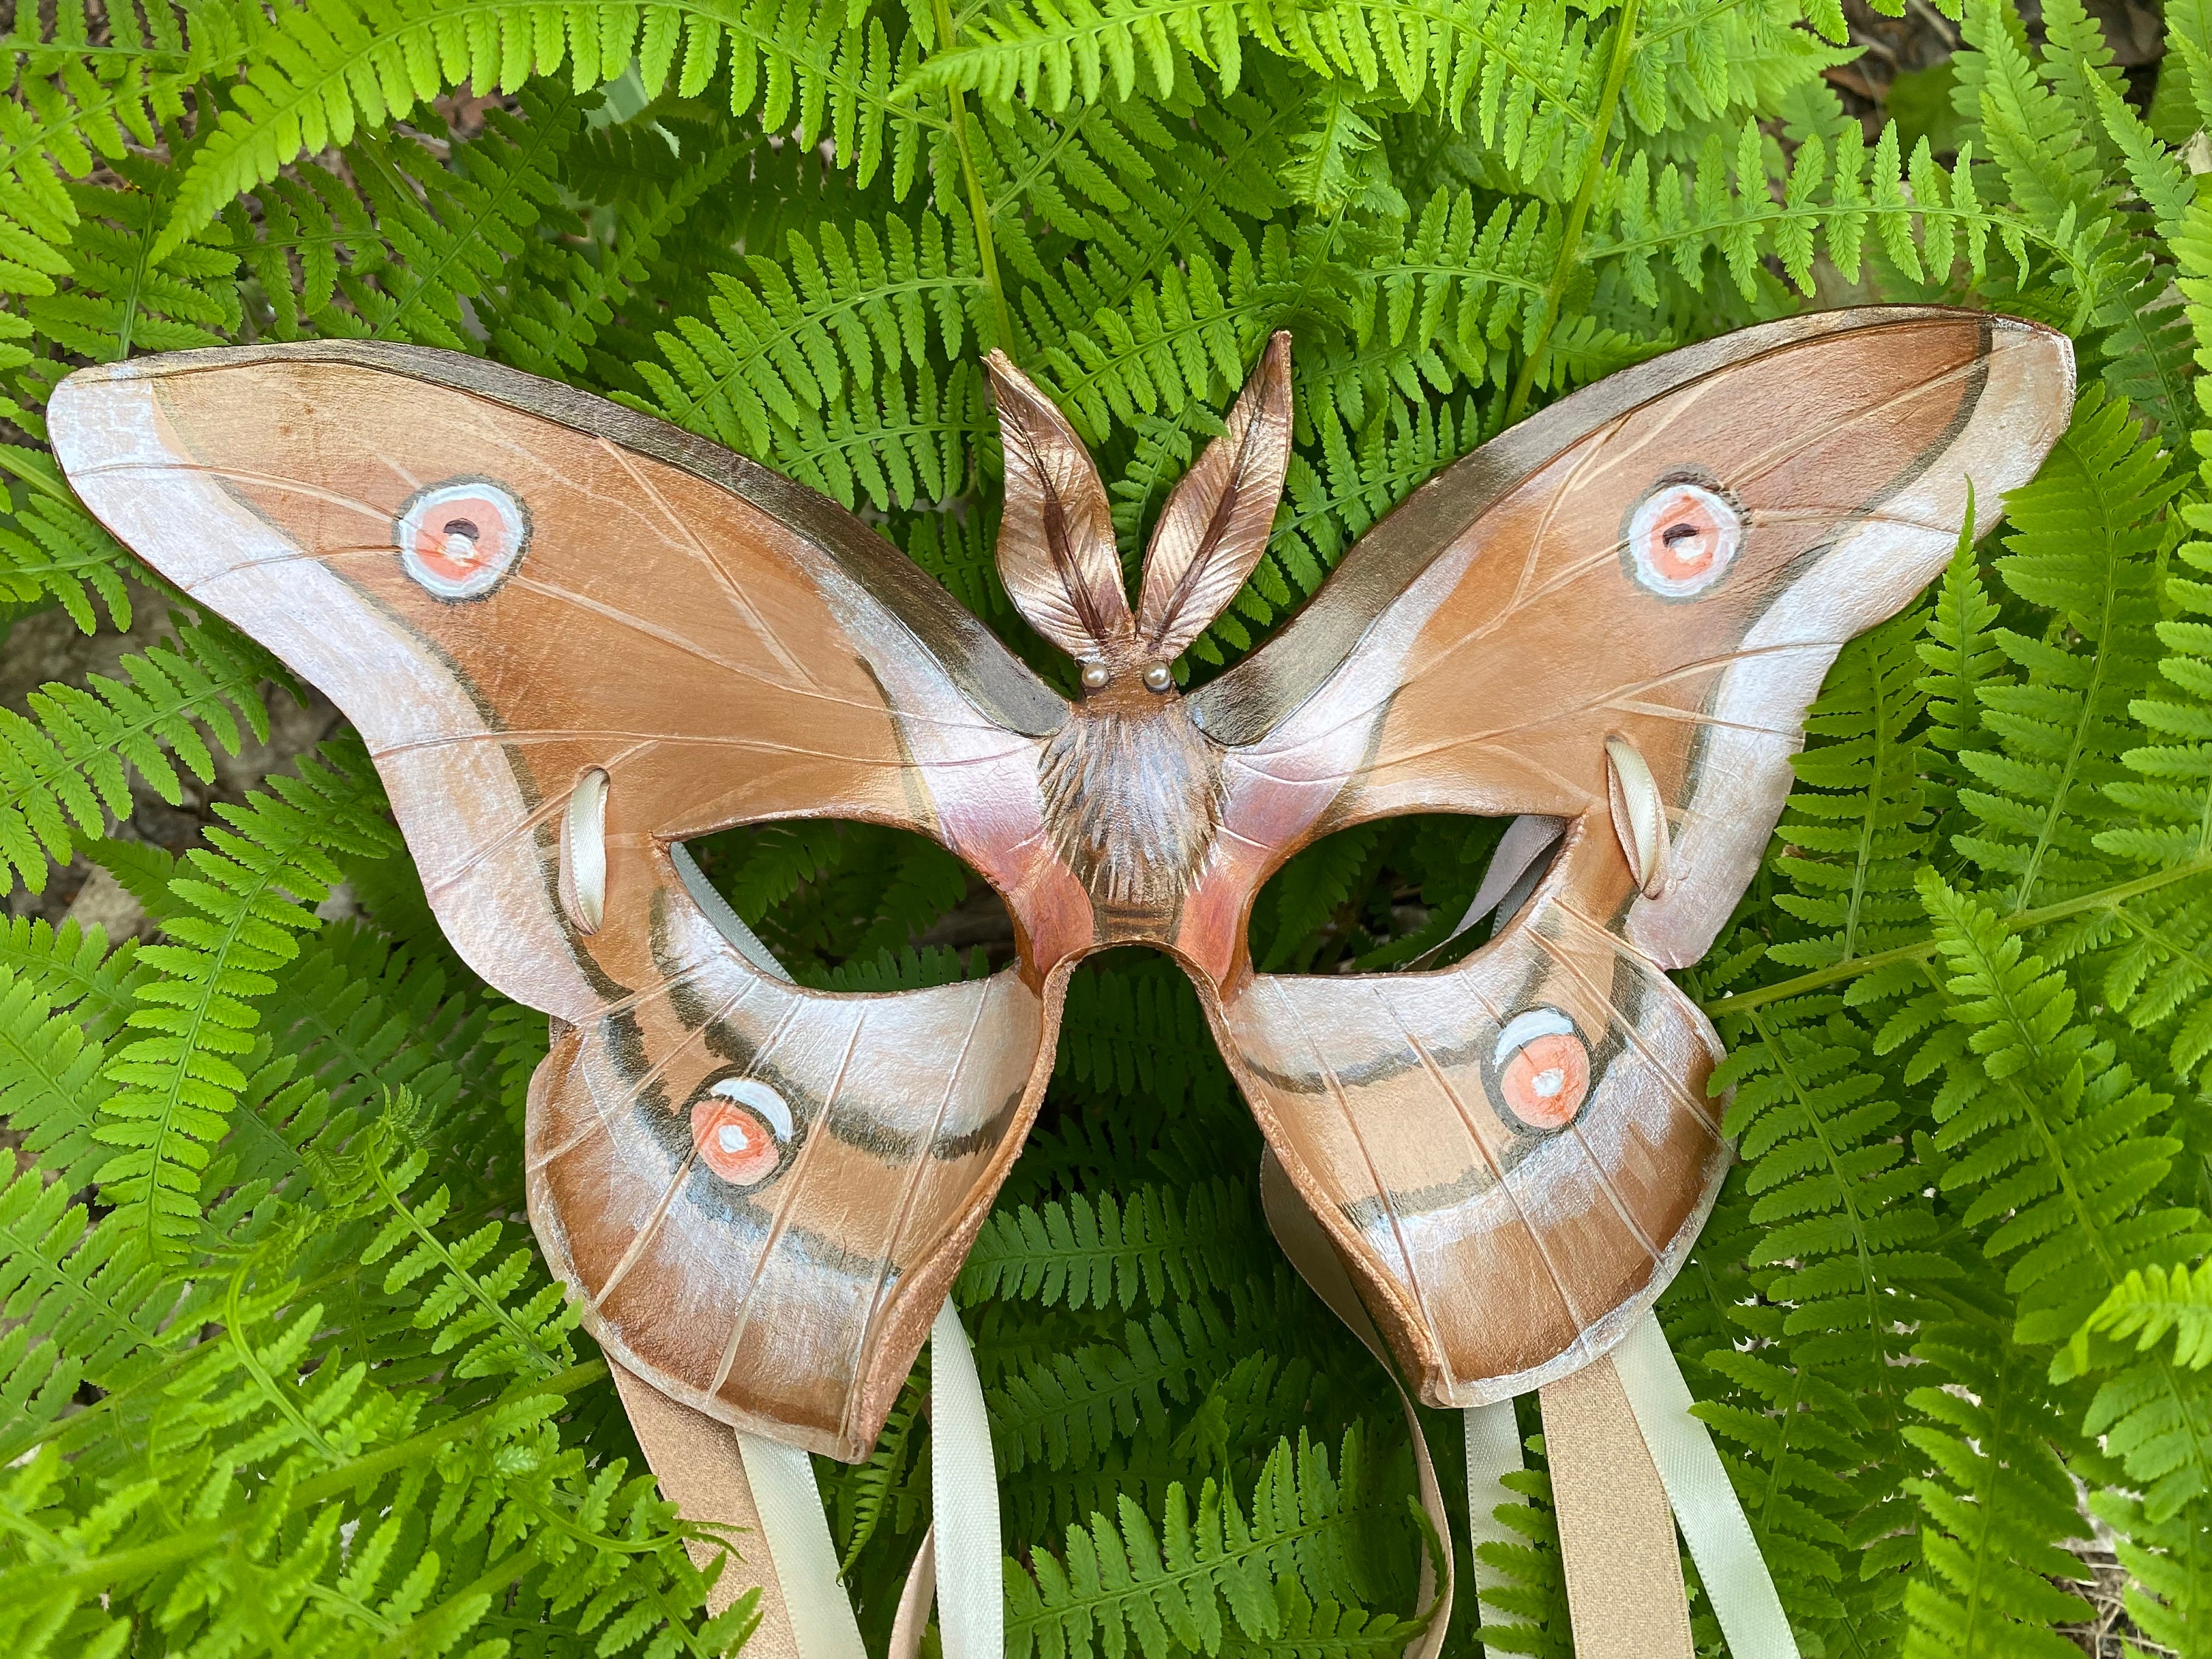 Farfalla Grezzo - Blank White Butterfly Masks to Decorate